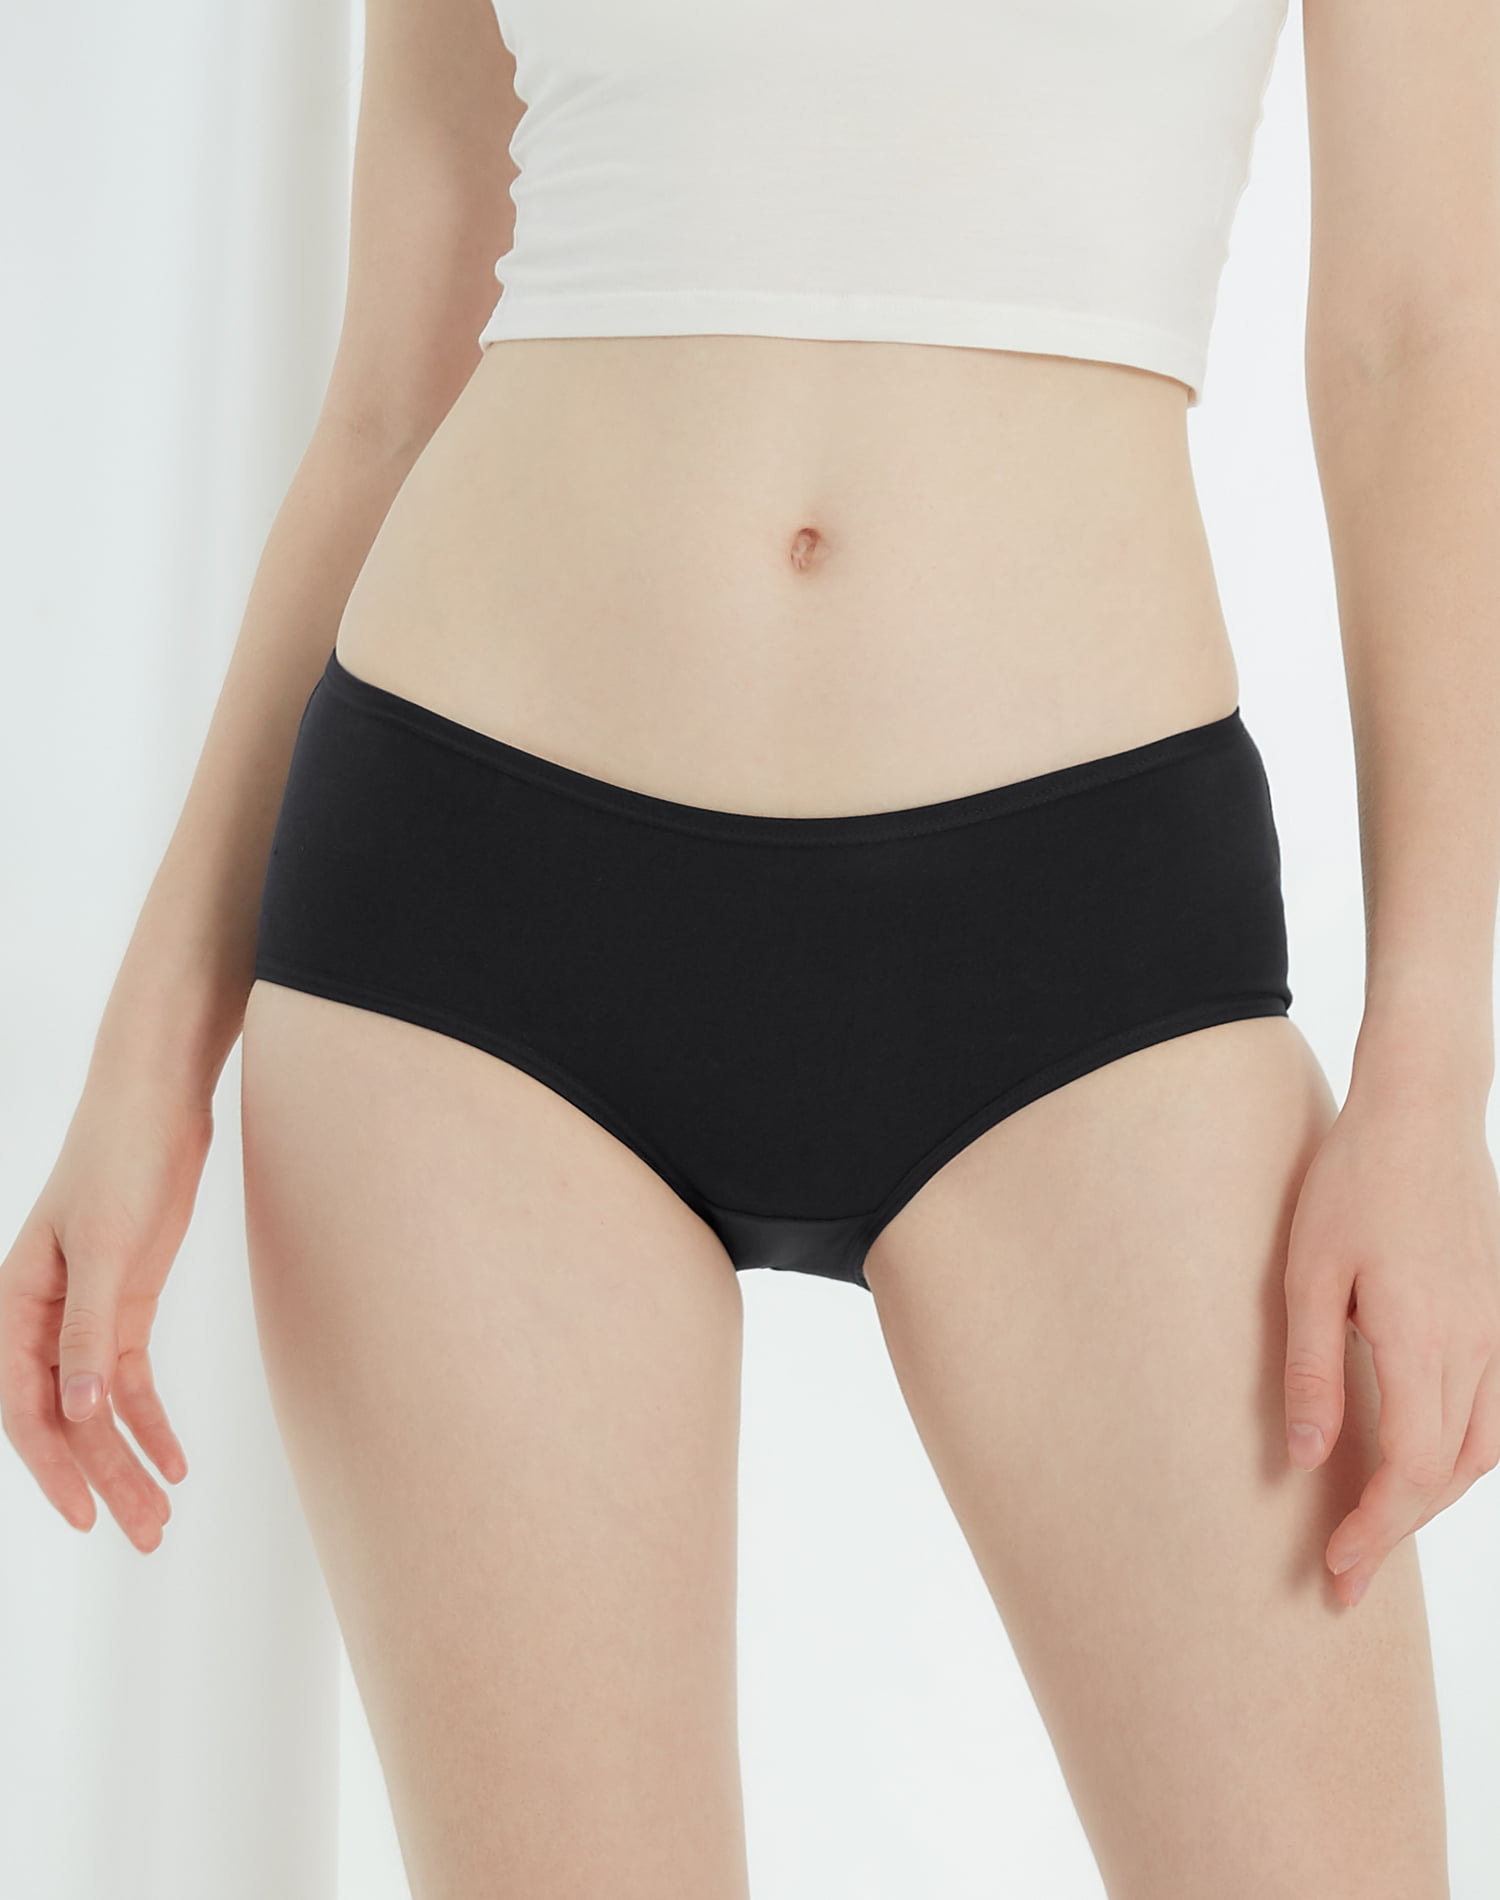 INNERSY Girls Underwear Cotton Briefs Panties for Teens 6-Pack (S(8-10  yrs), Black)